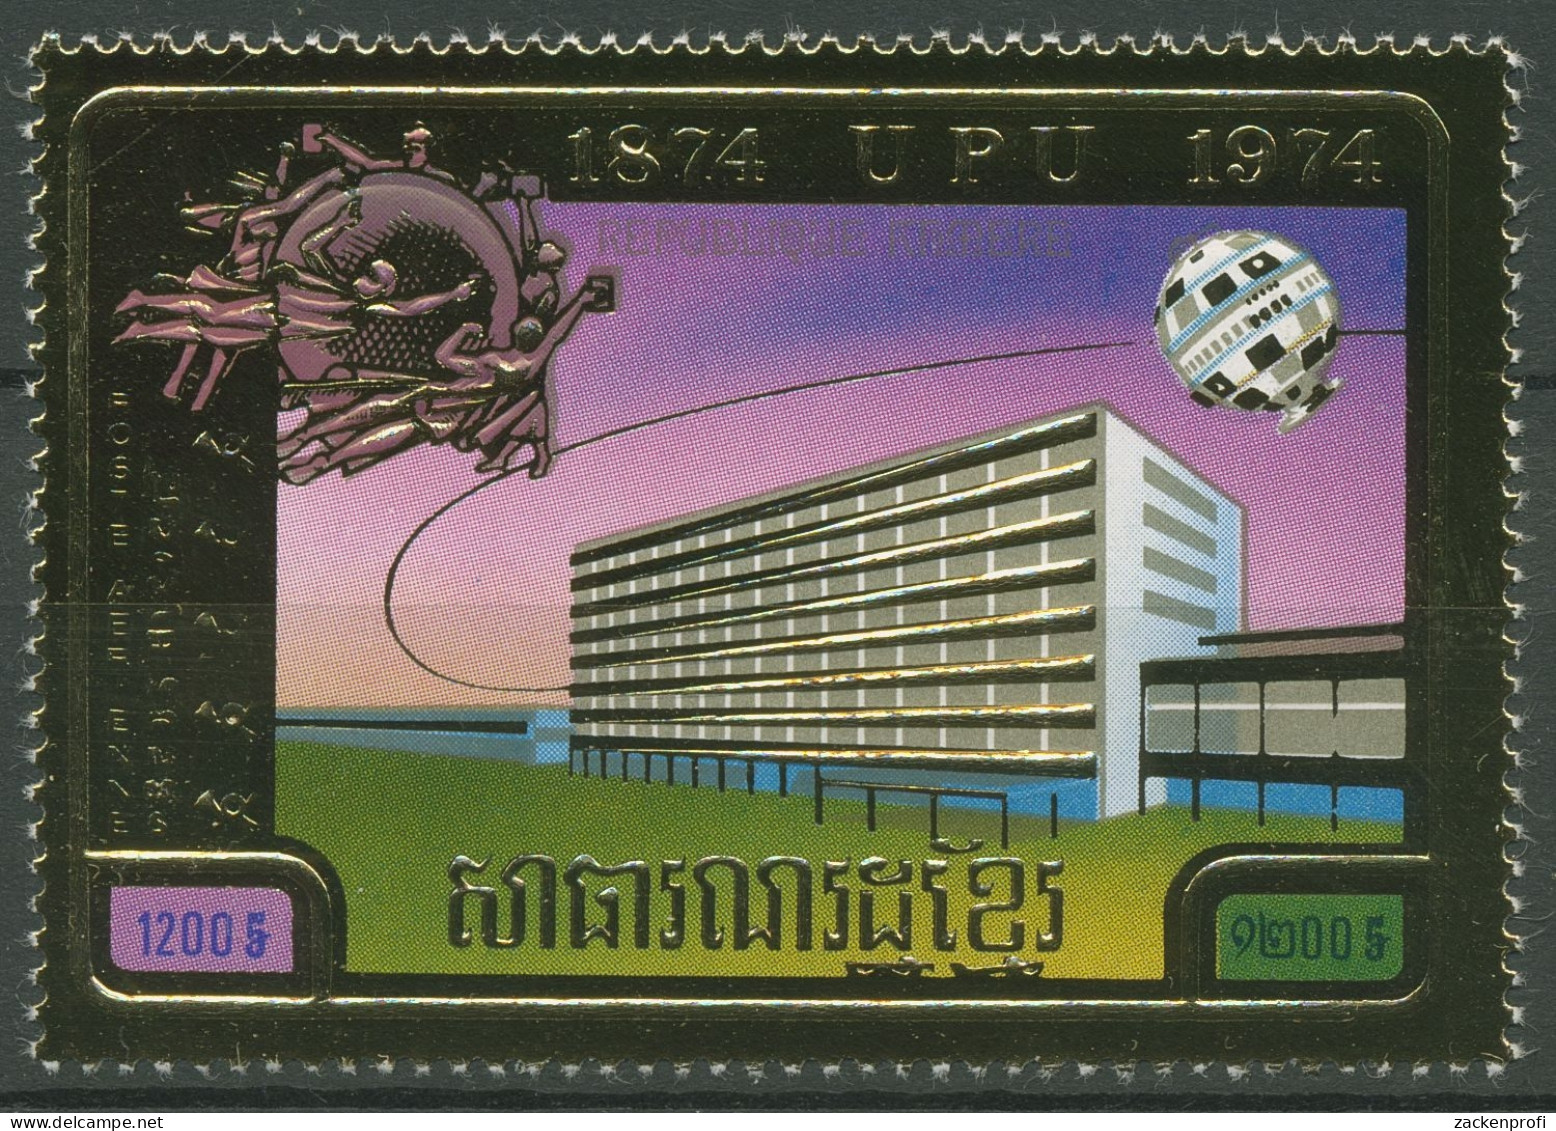 Kambodscha 1974 Weltpostverein UPU 405 A Postfrisch - Cambodge